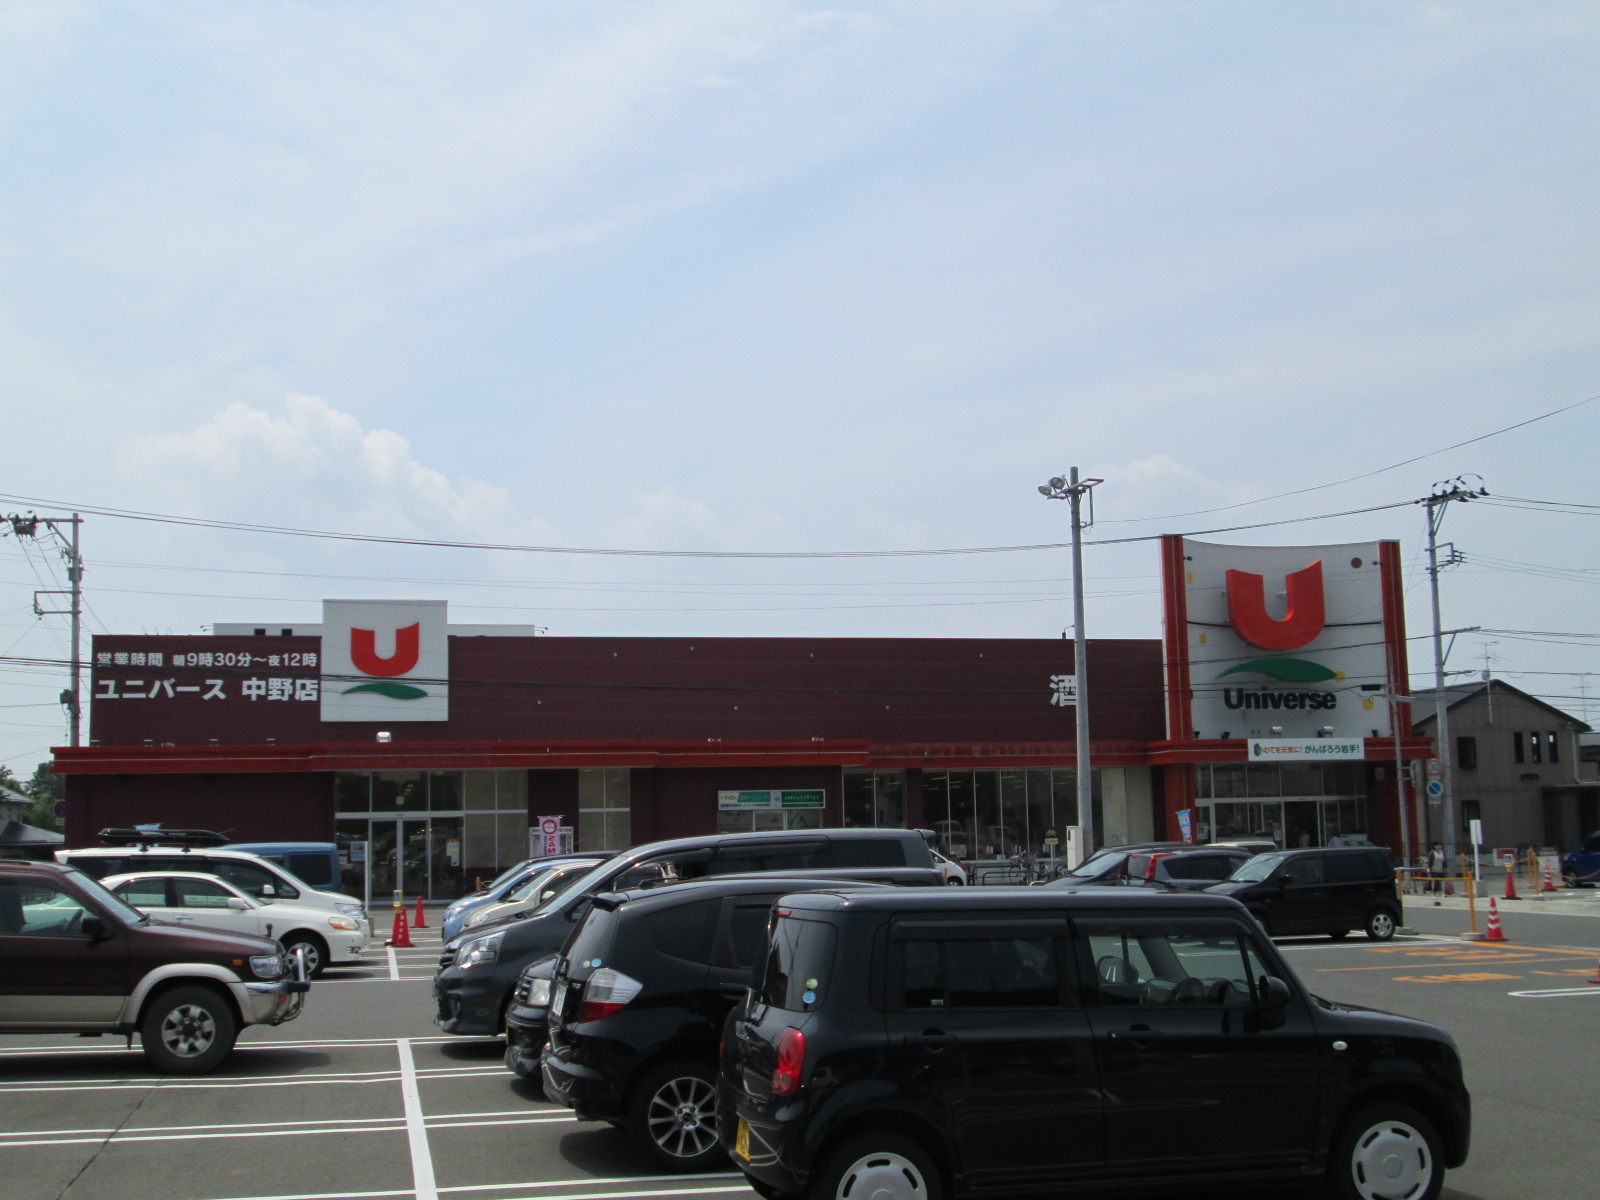 Supermarket. 955m until the universe Nakano store (Super)